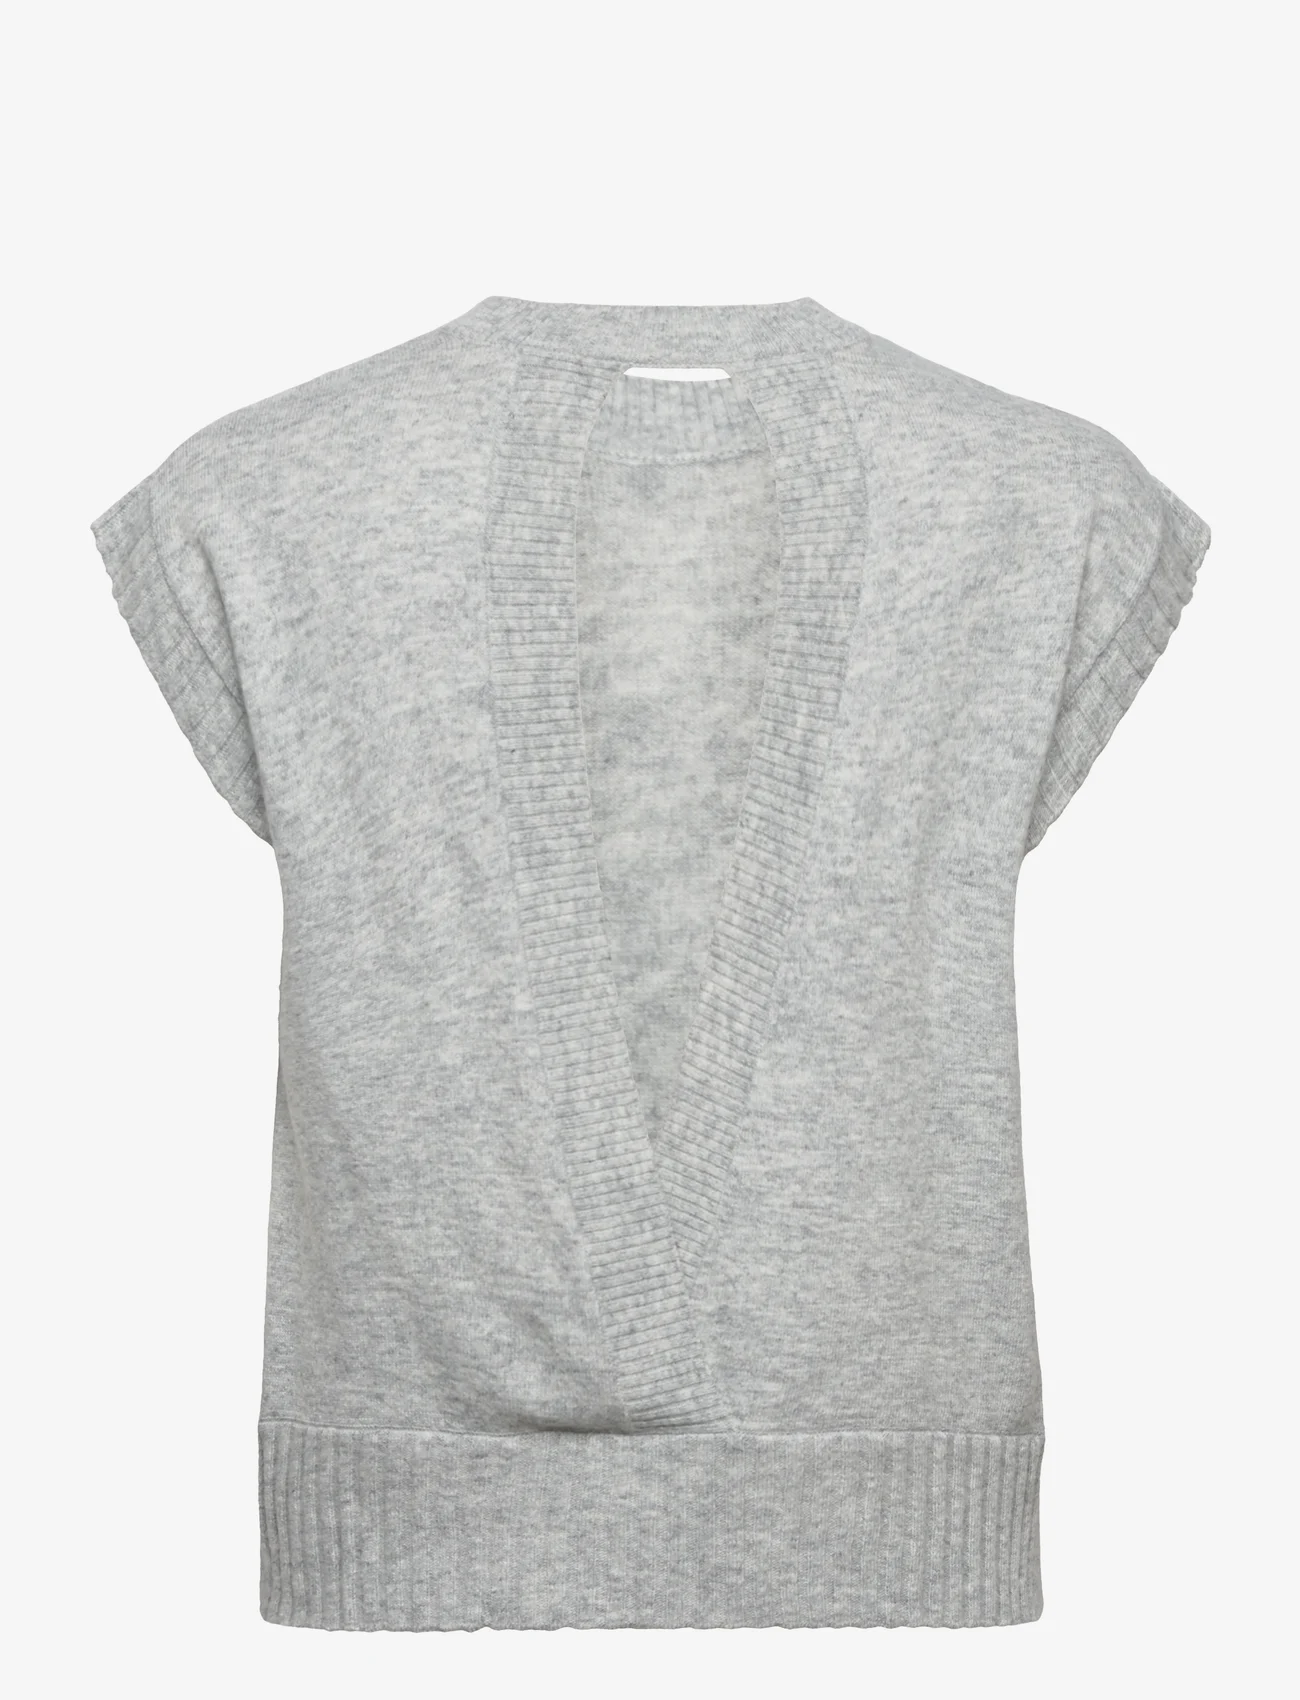 Rabens Saloner - Rodine - Cashmix openback sweater - pullover - light grey melan - 1